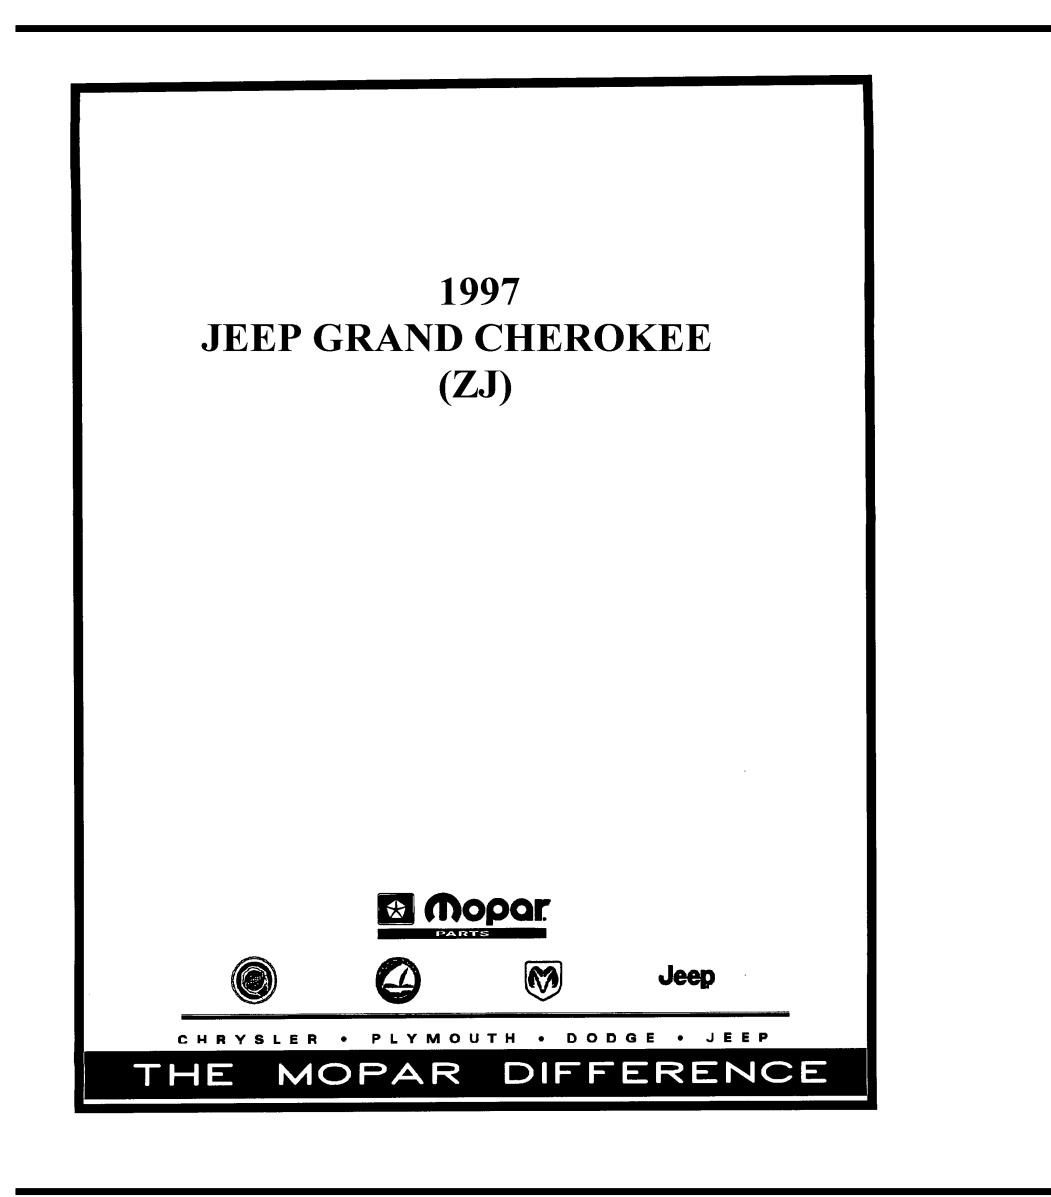 1997 jeep cherokee owners manual pdf free download spotifydownload